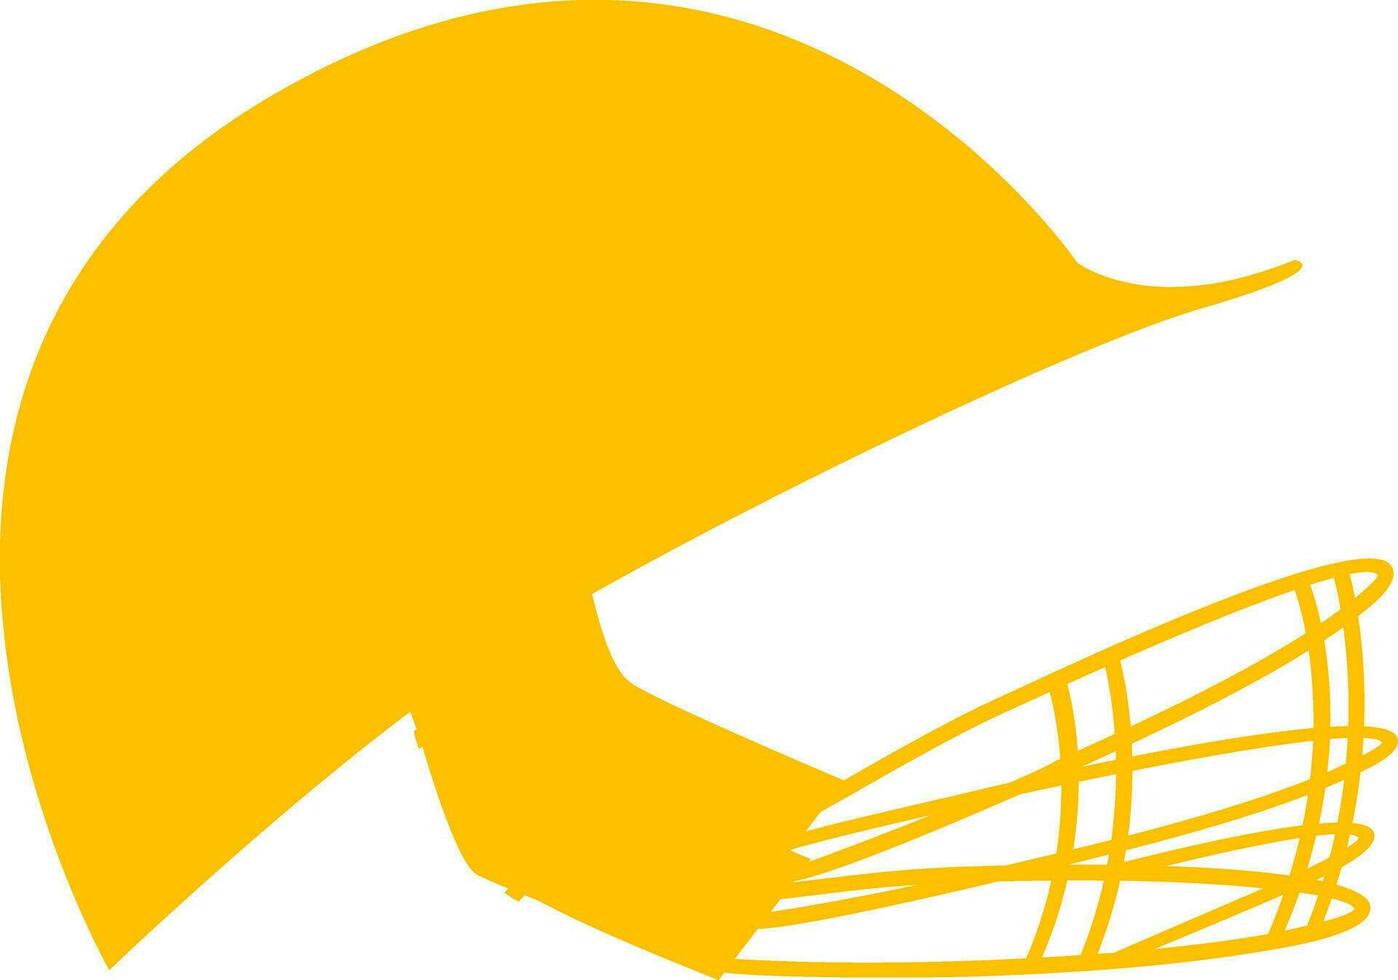 vetor símbolo do Grilo capacete fez com amarelo cor.